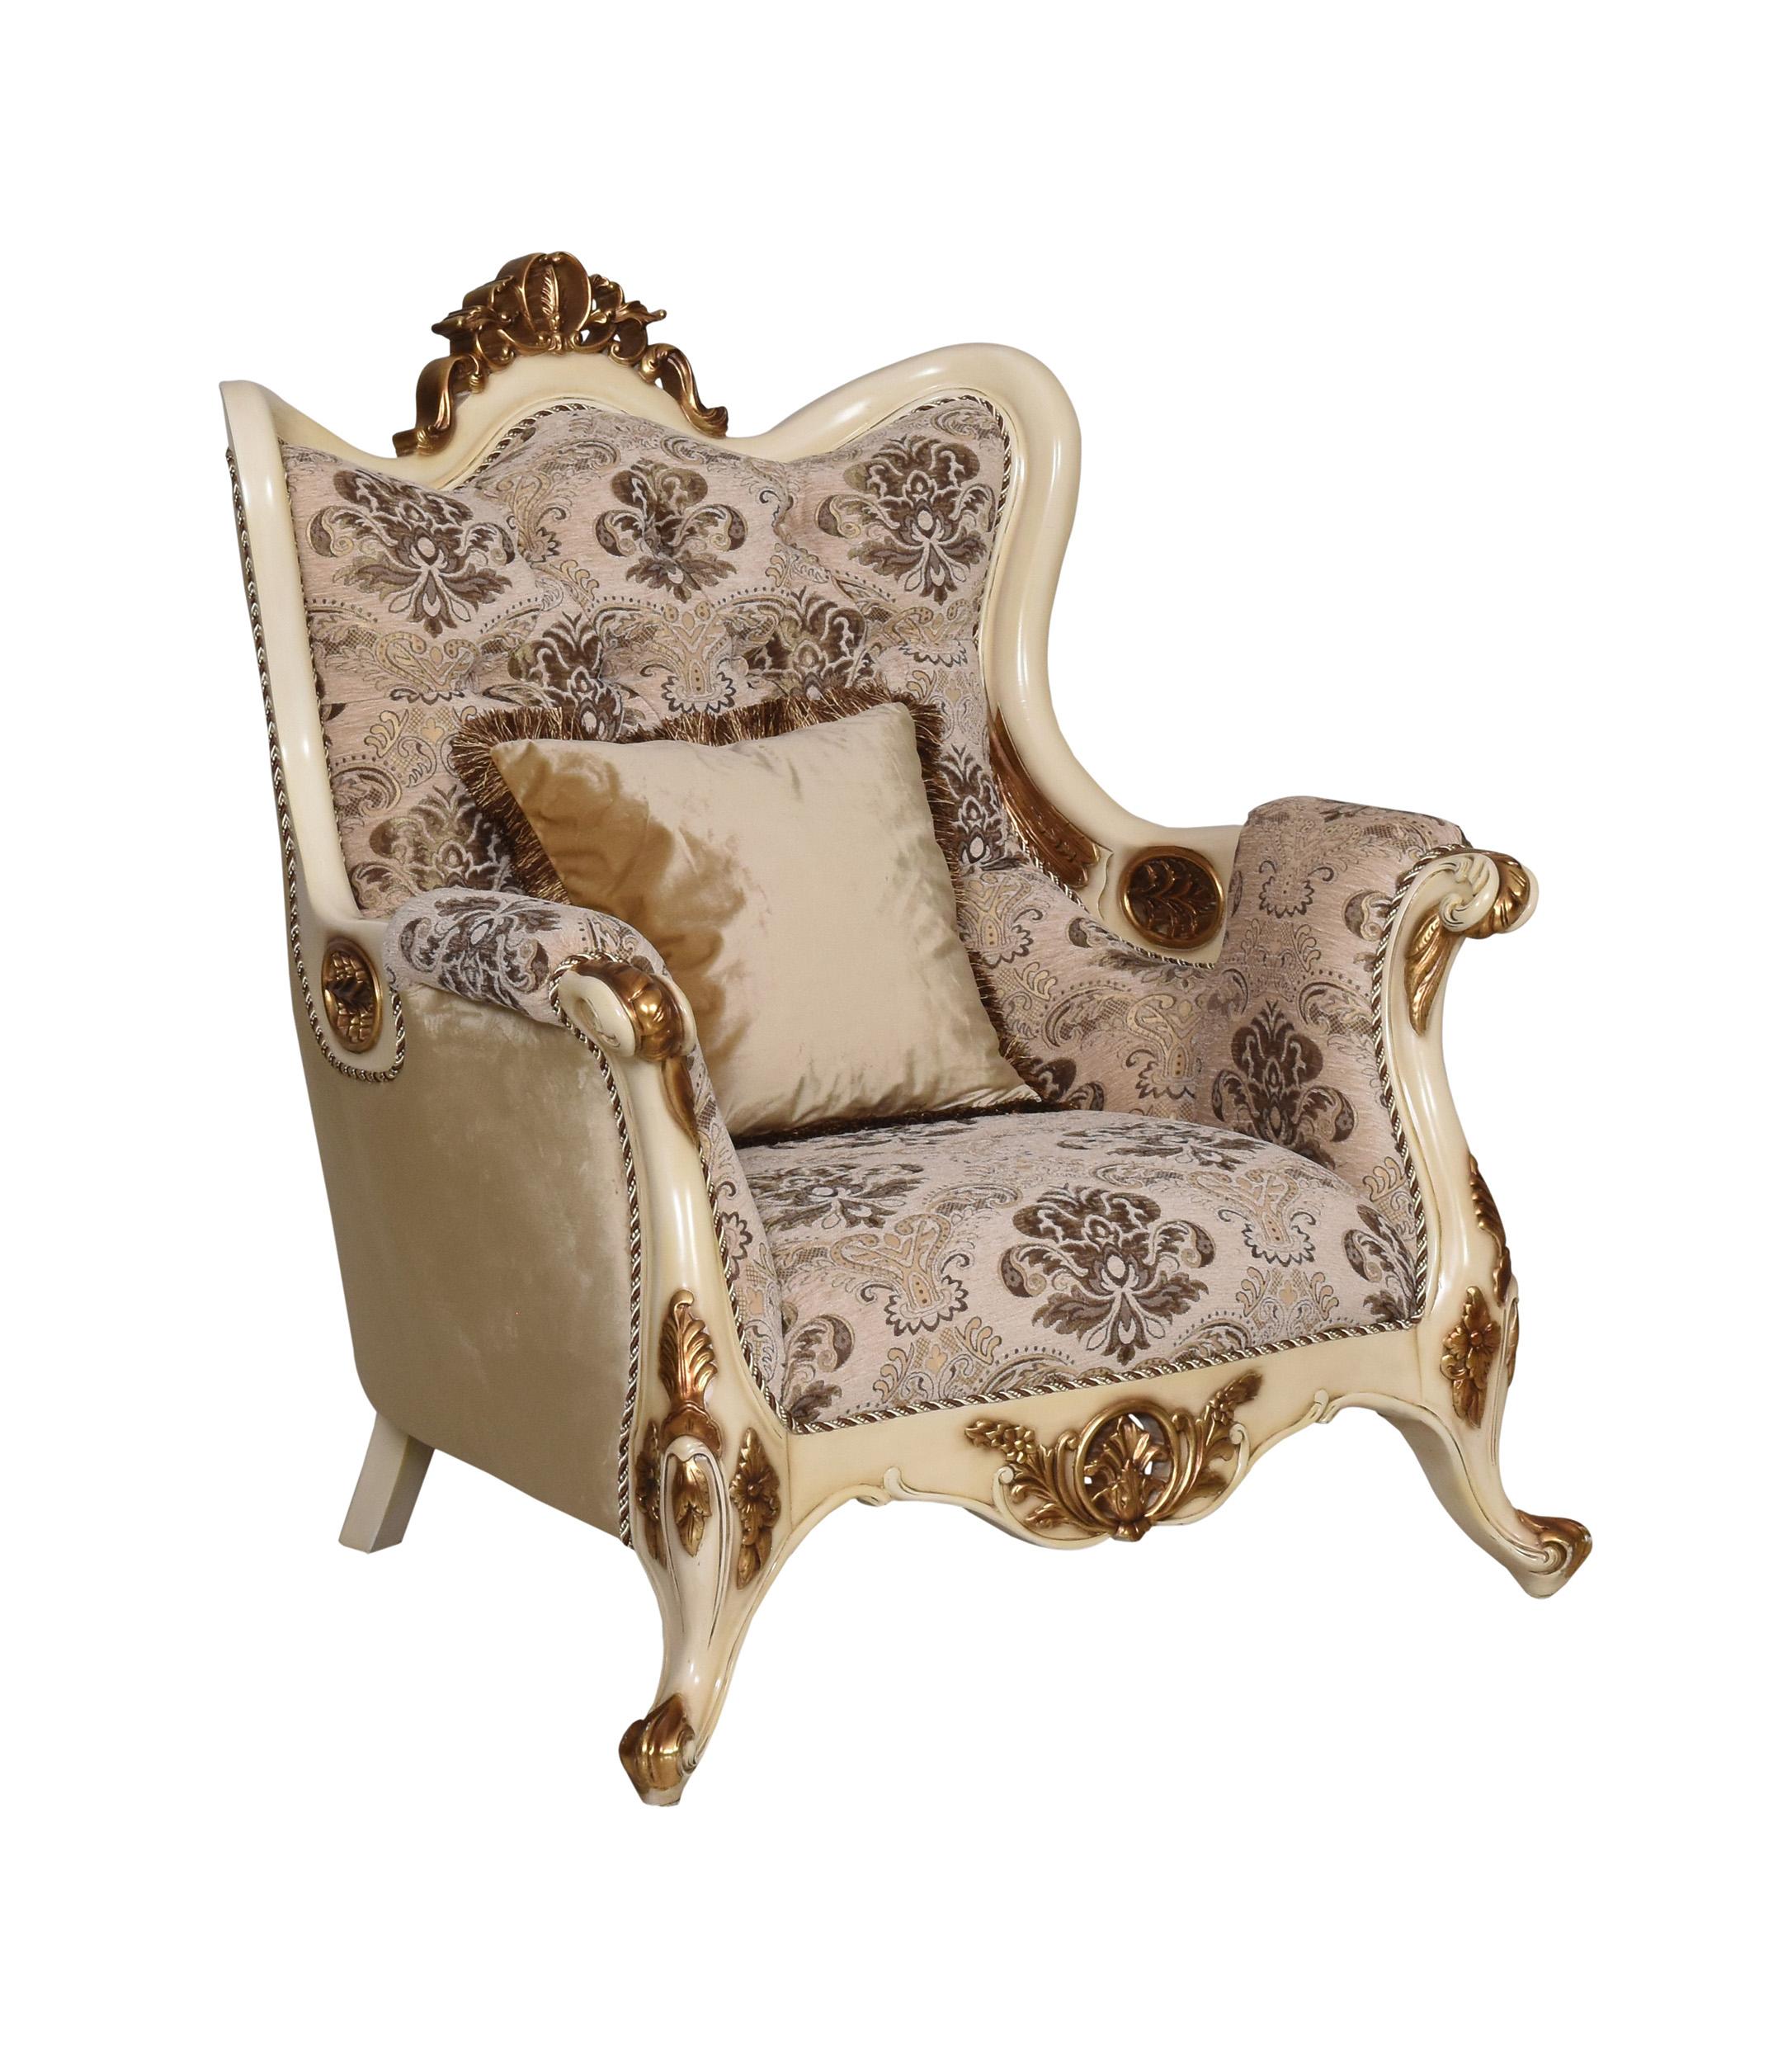 Classic, Traditional Arm Chair PARIS 37008-C in Antique, Gold, Beige Fabric